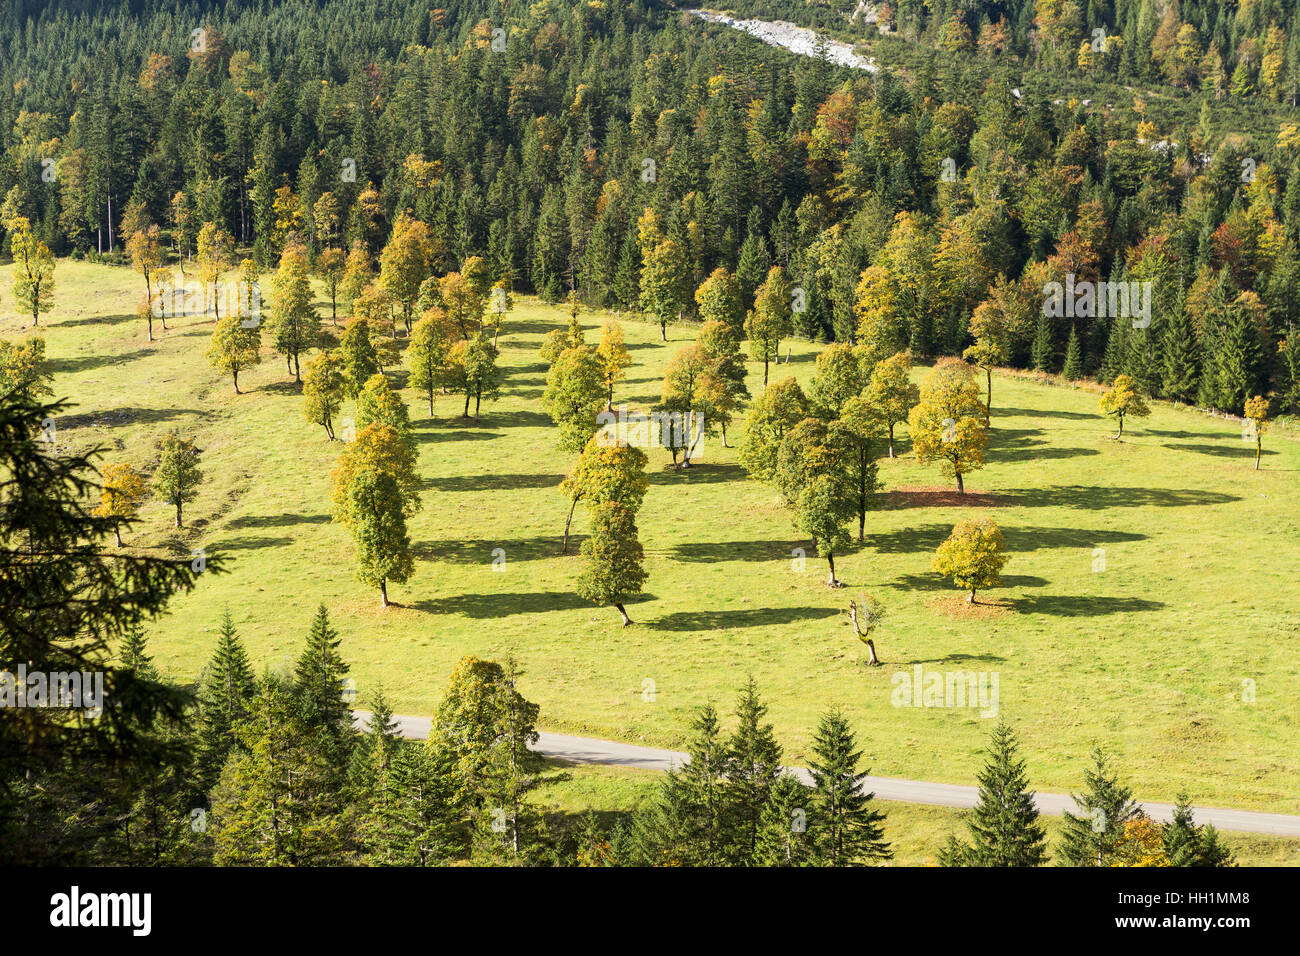 Eng Plumsjoch et dans les montagnes du Karwendel Banque D'Images